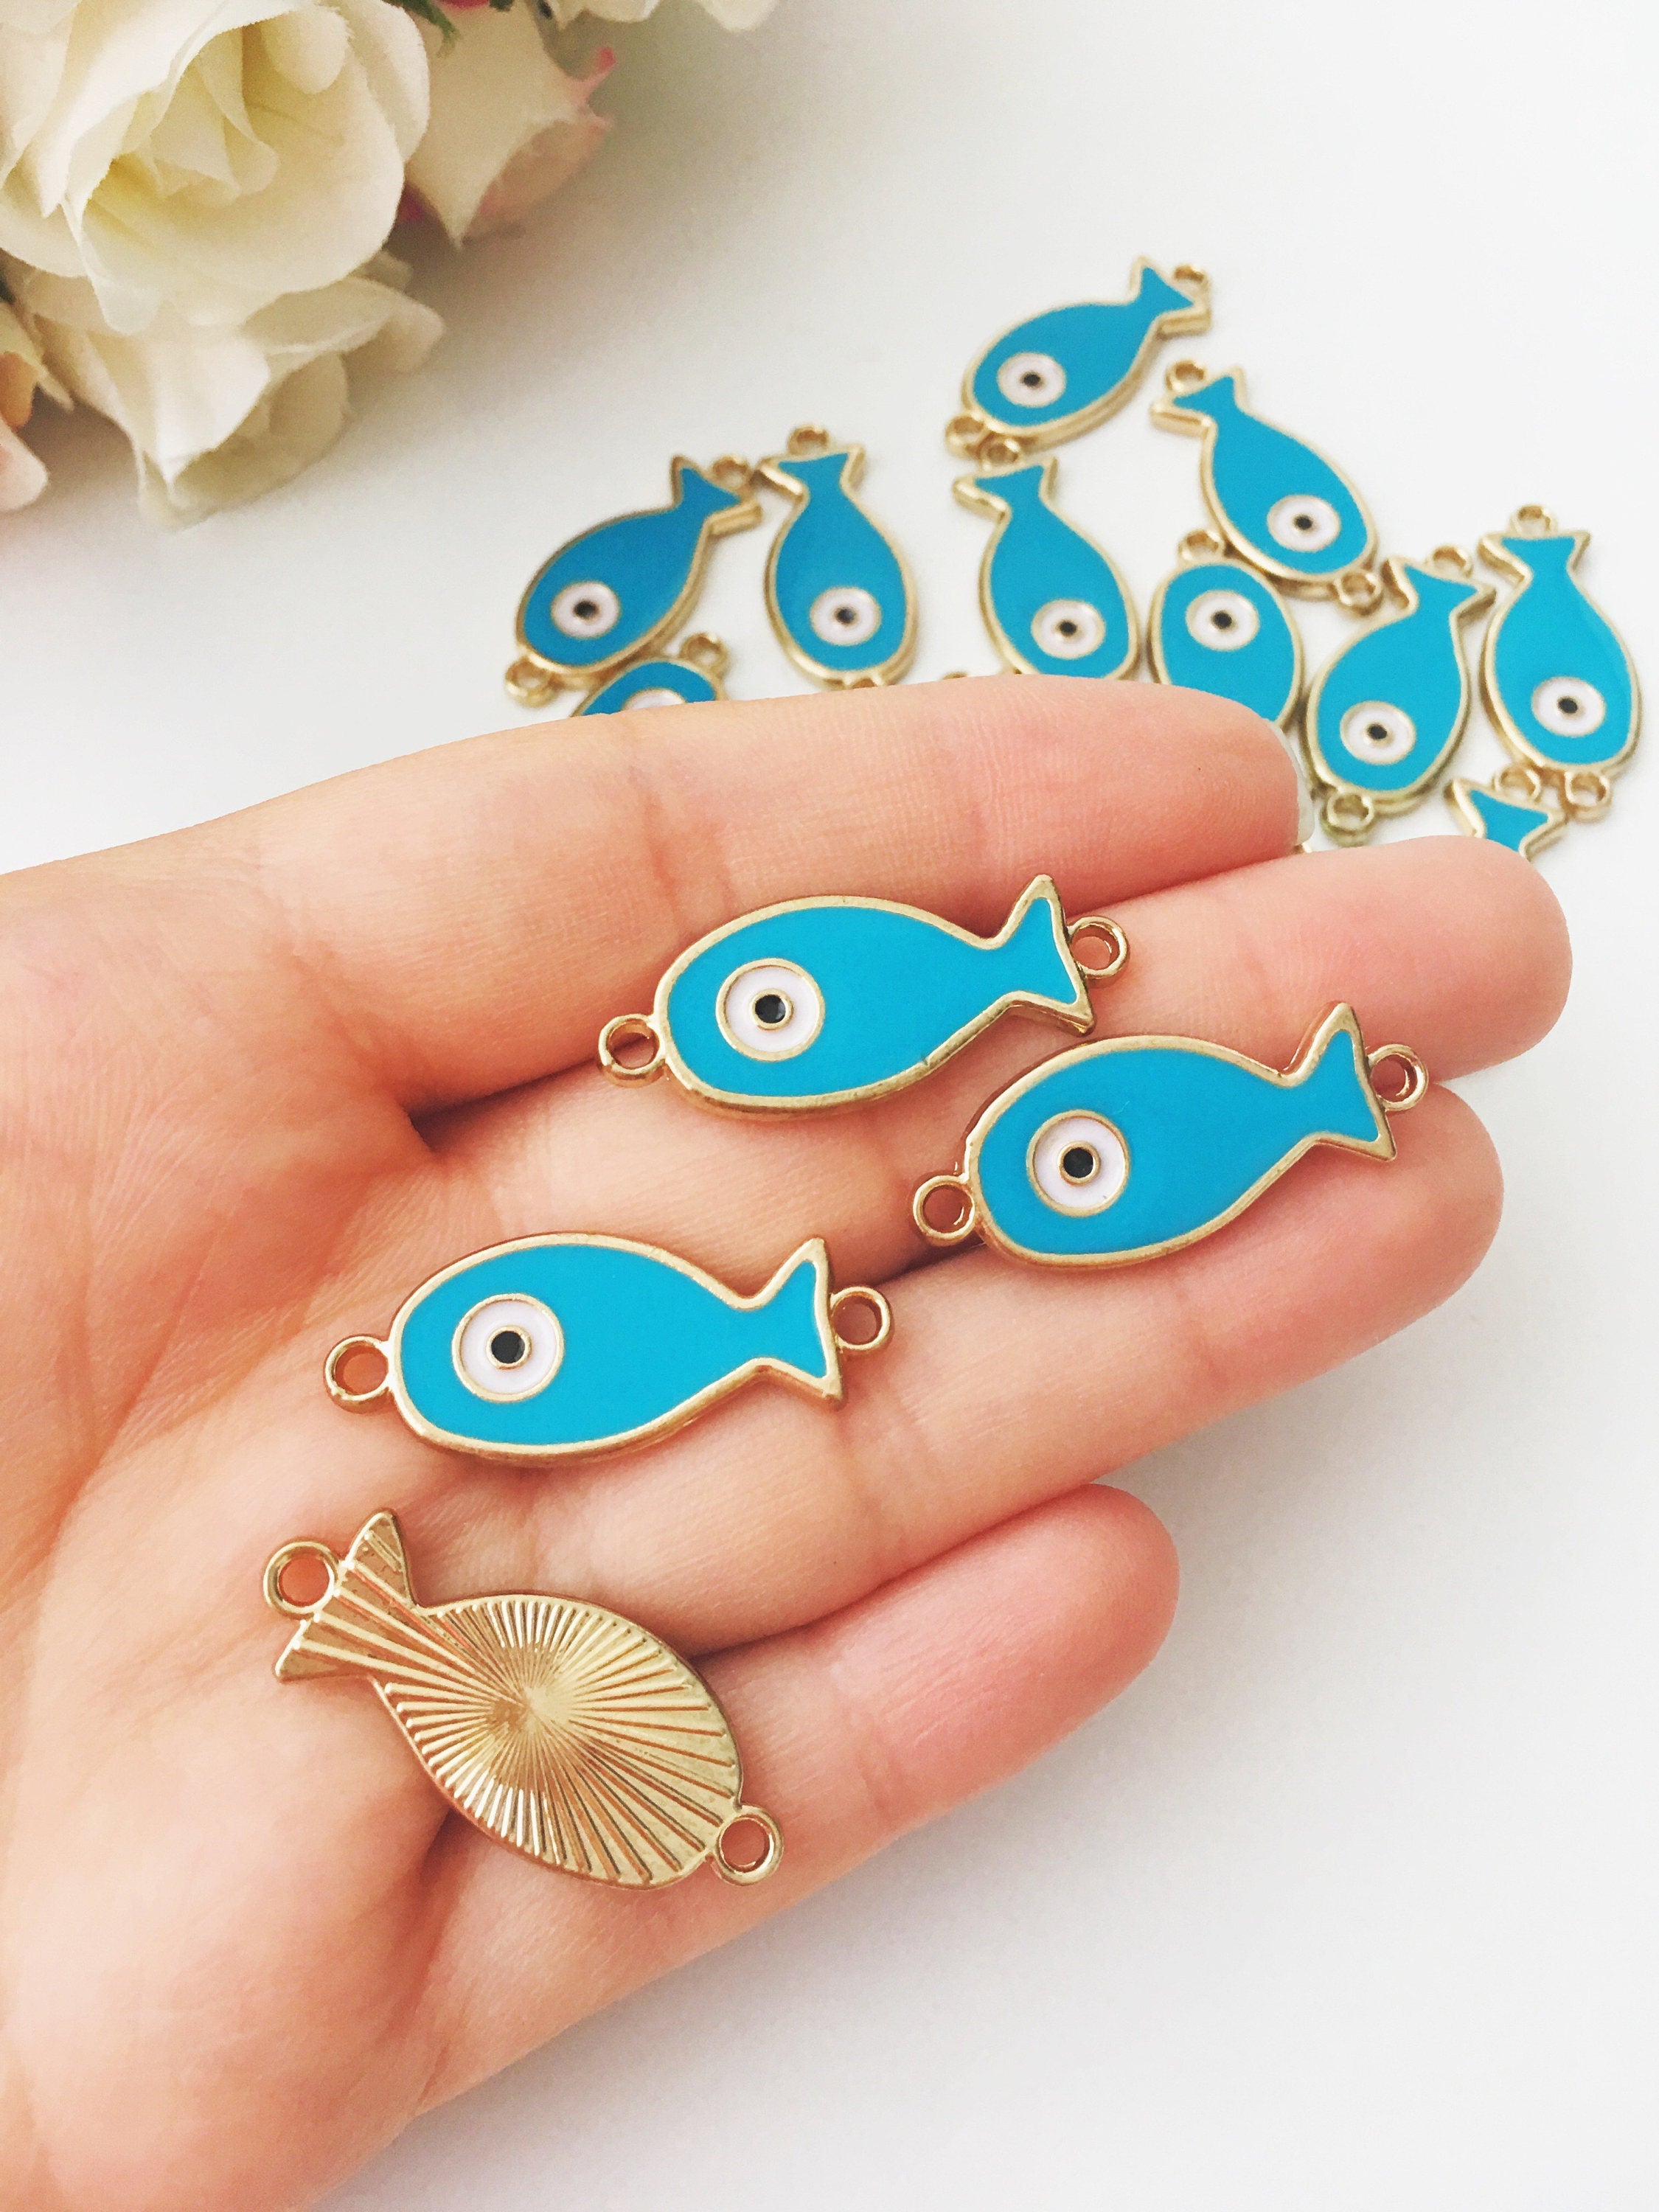 Evil eye charm, turquoise pendant, 2 pcs fish charm for necklace, evil